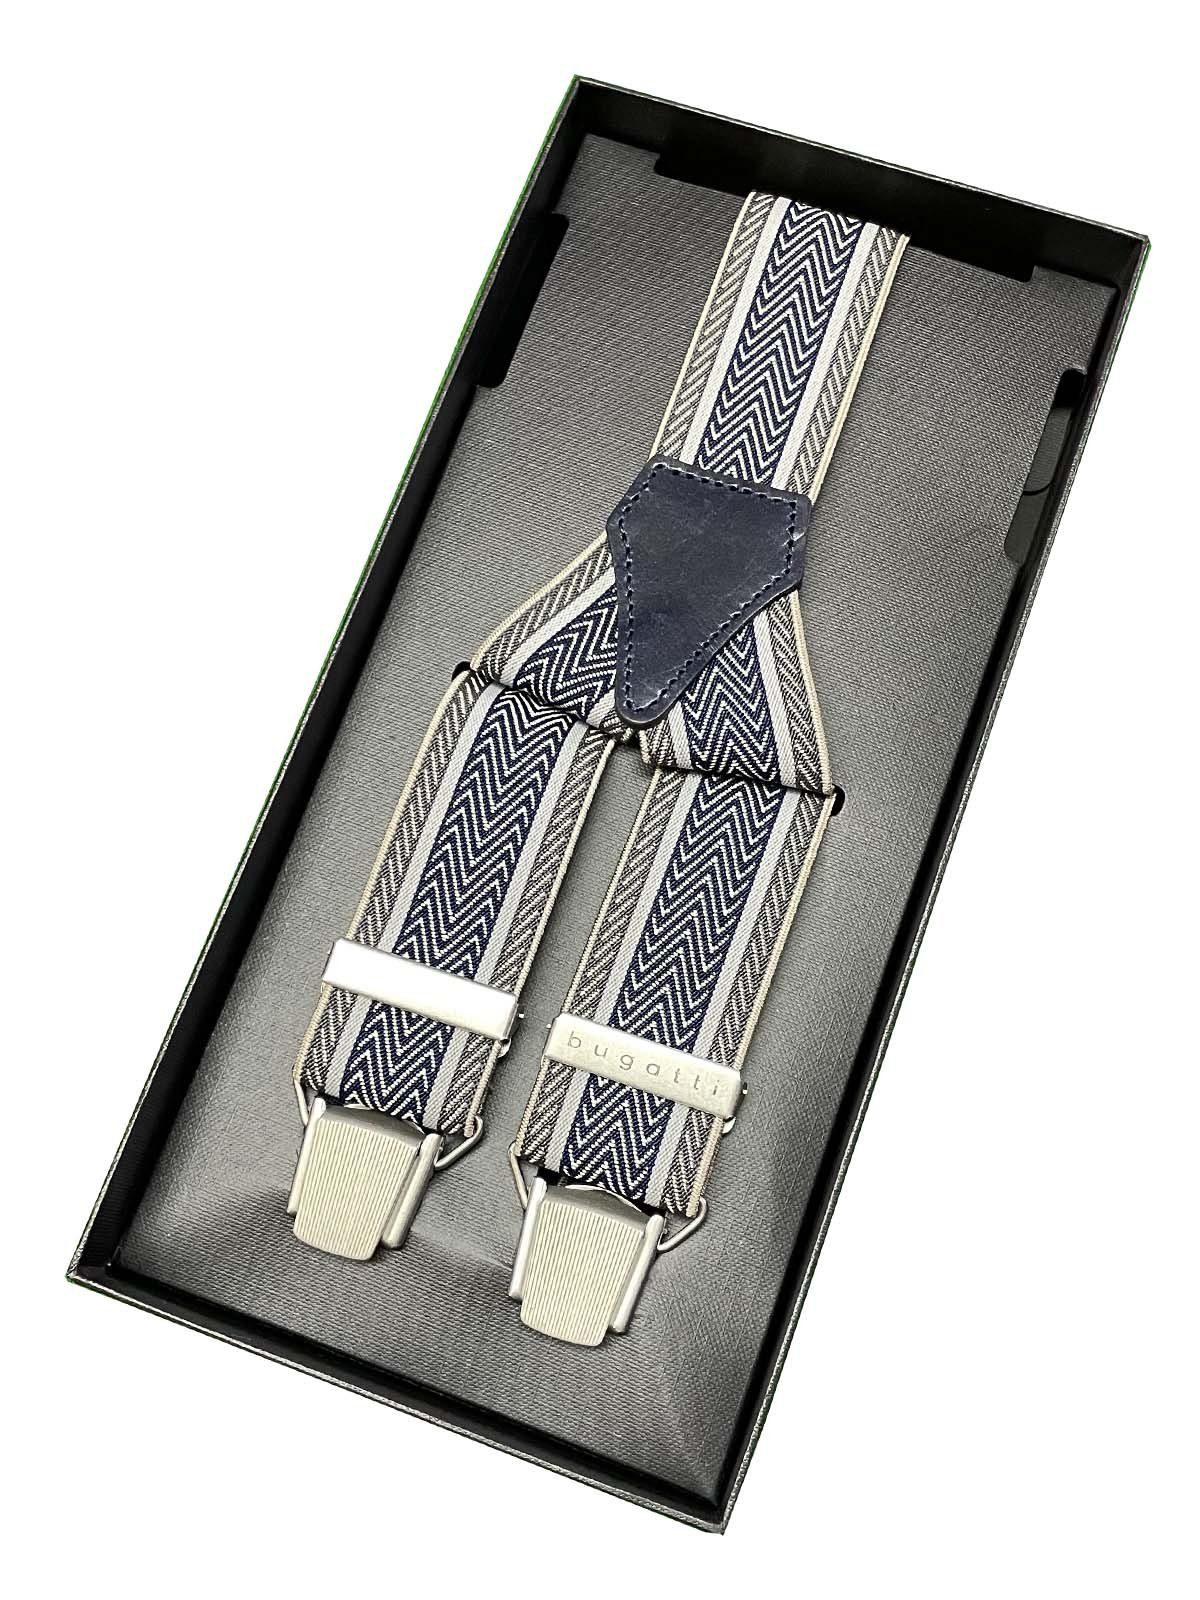 Hosenträger mm Bugatti-Hosenträger Stripe 35 LLOYD Marine Men’s Gr.120 Vollrindle Belts